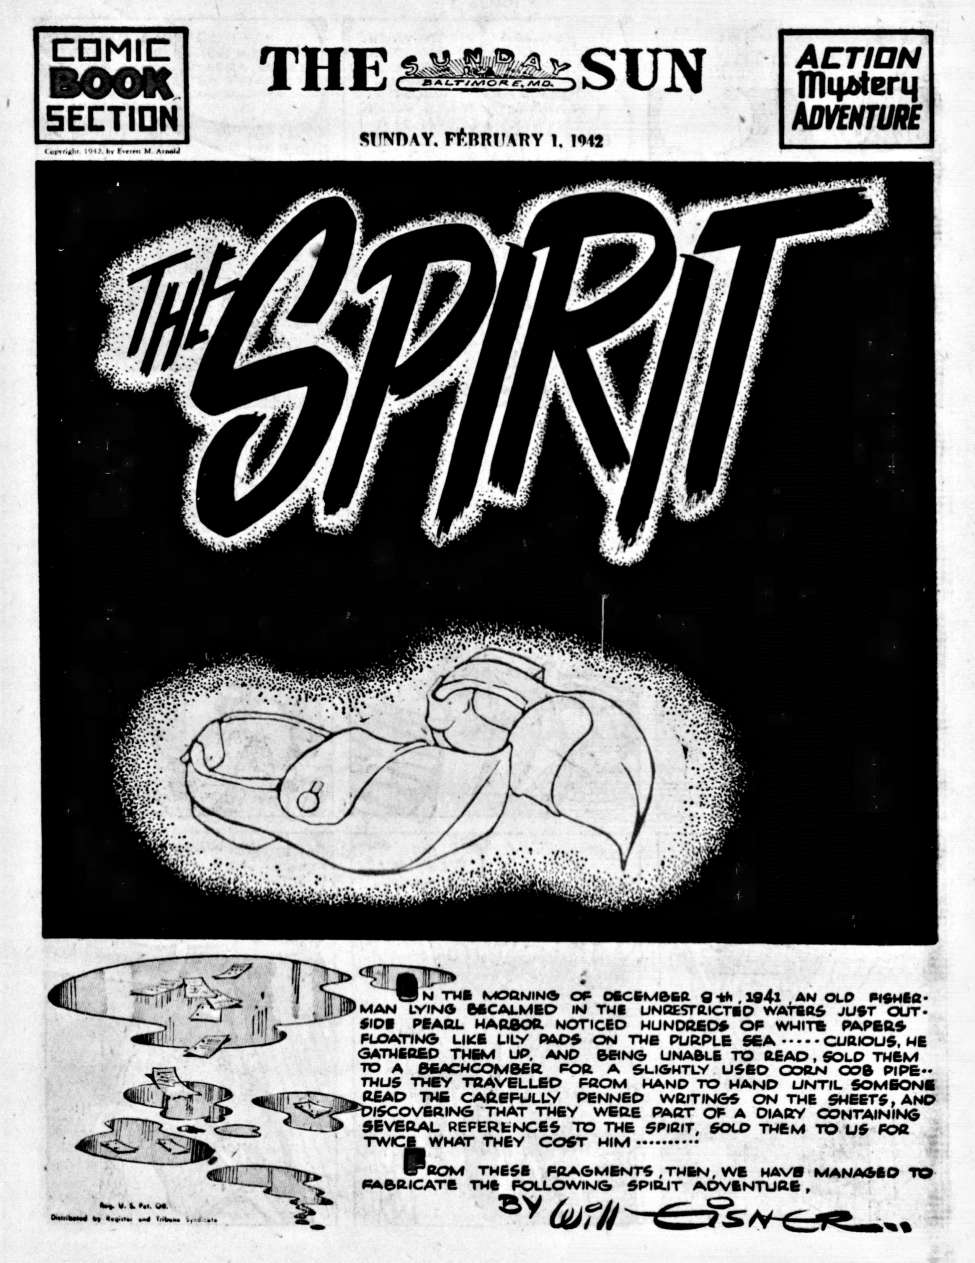 Comic Book Cover For The Spirit (1942-02-01) - Baltimore Sun (b/w)